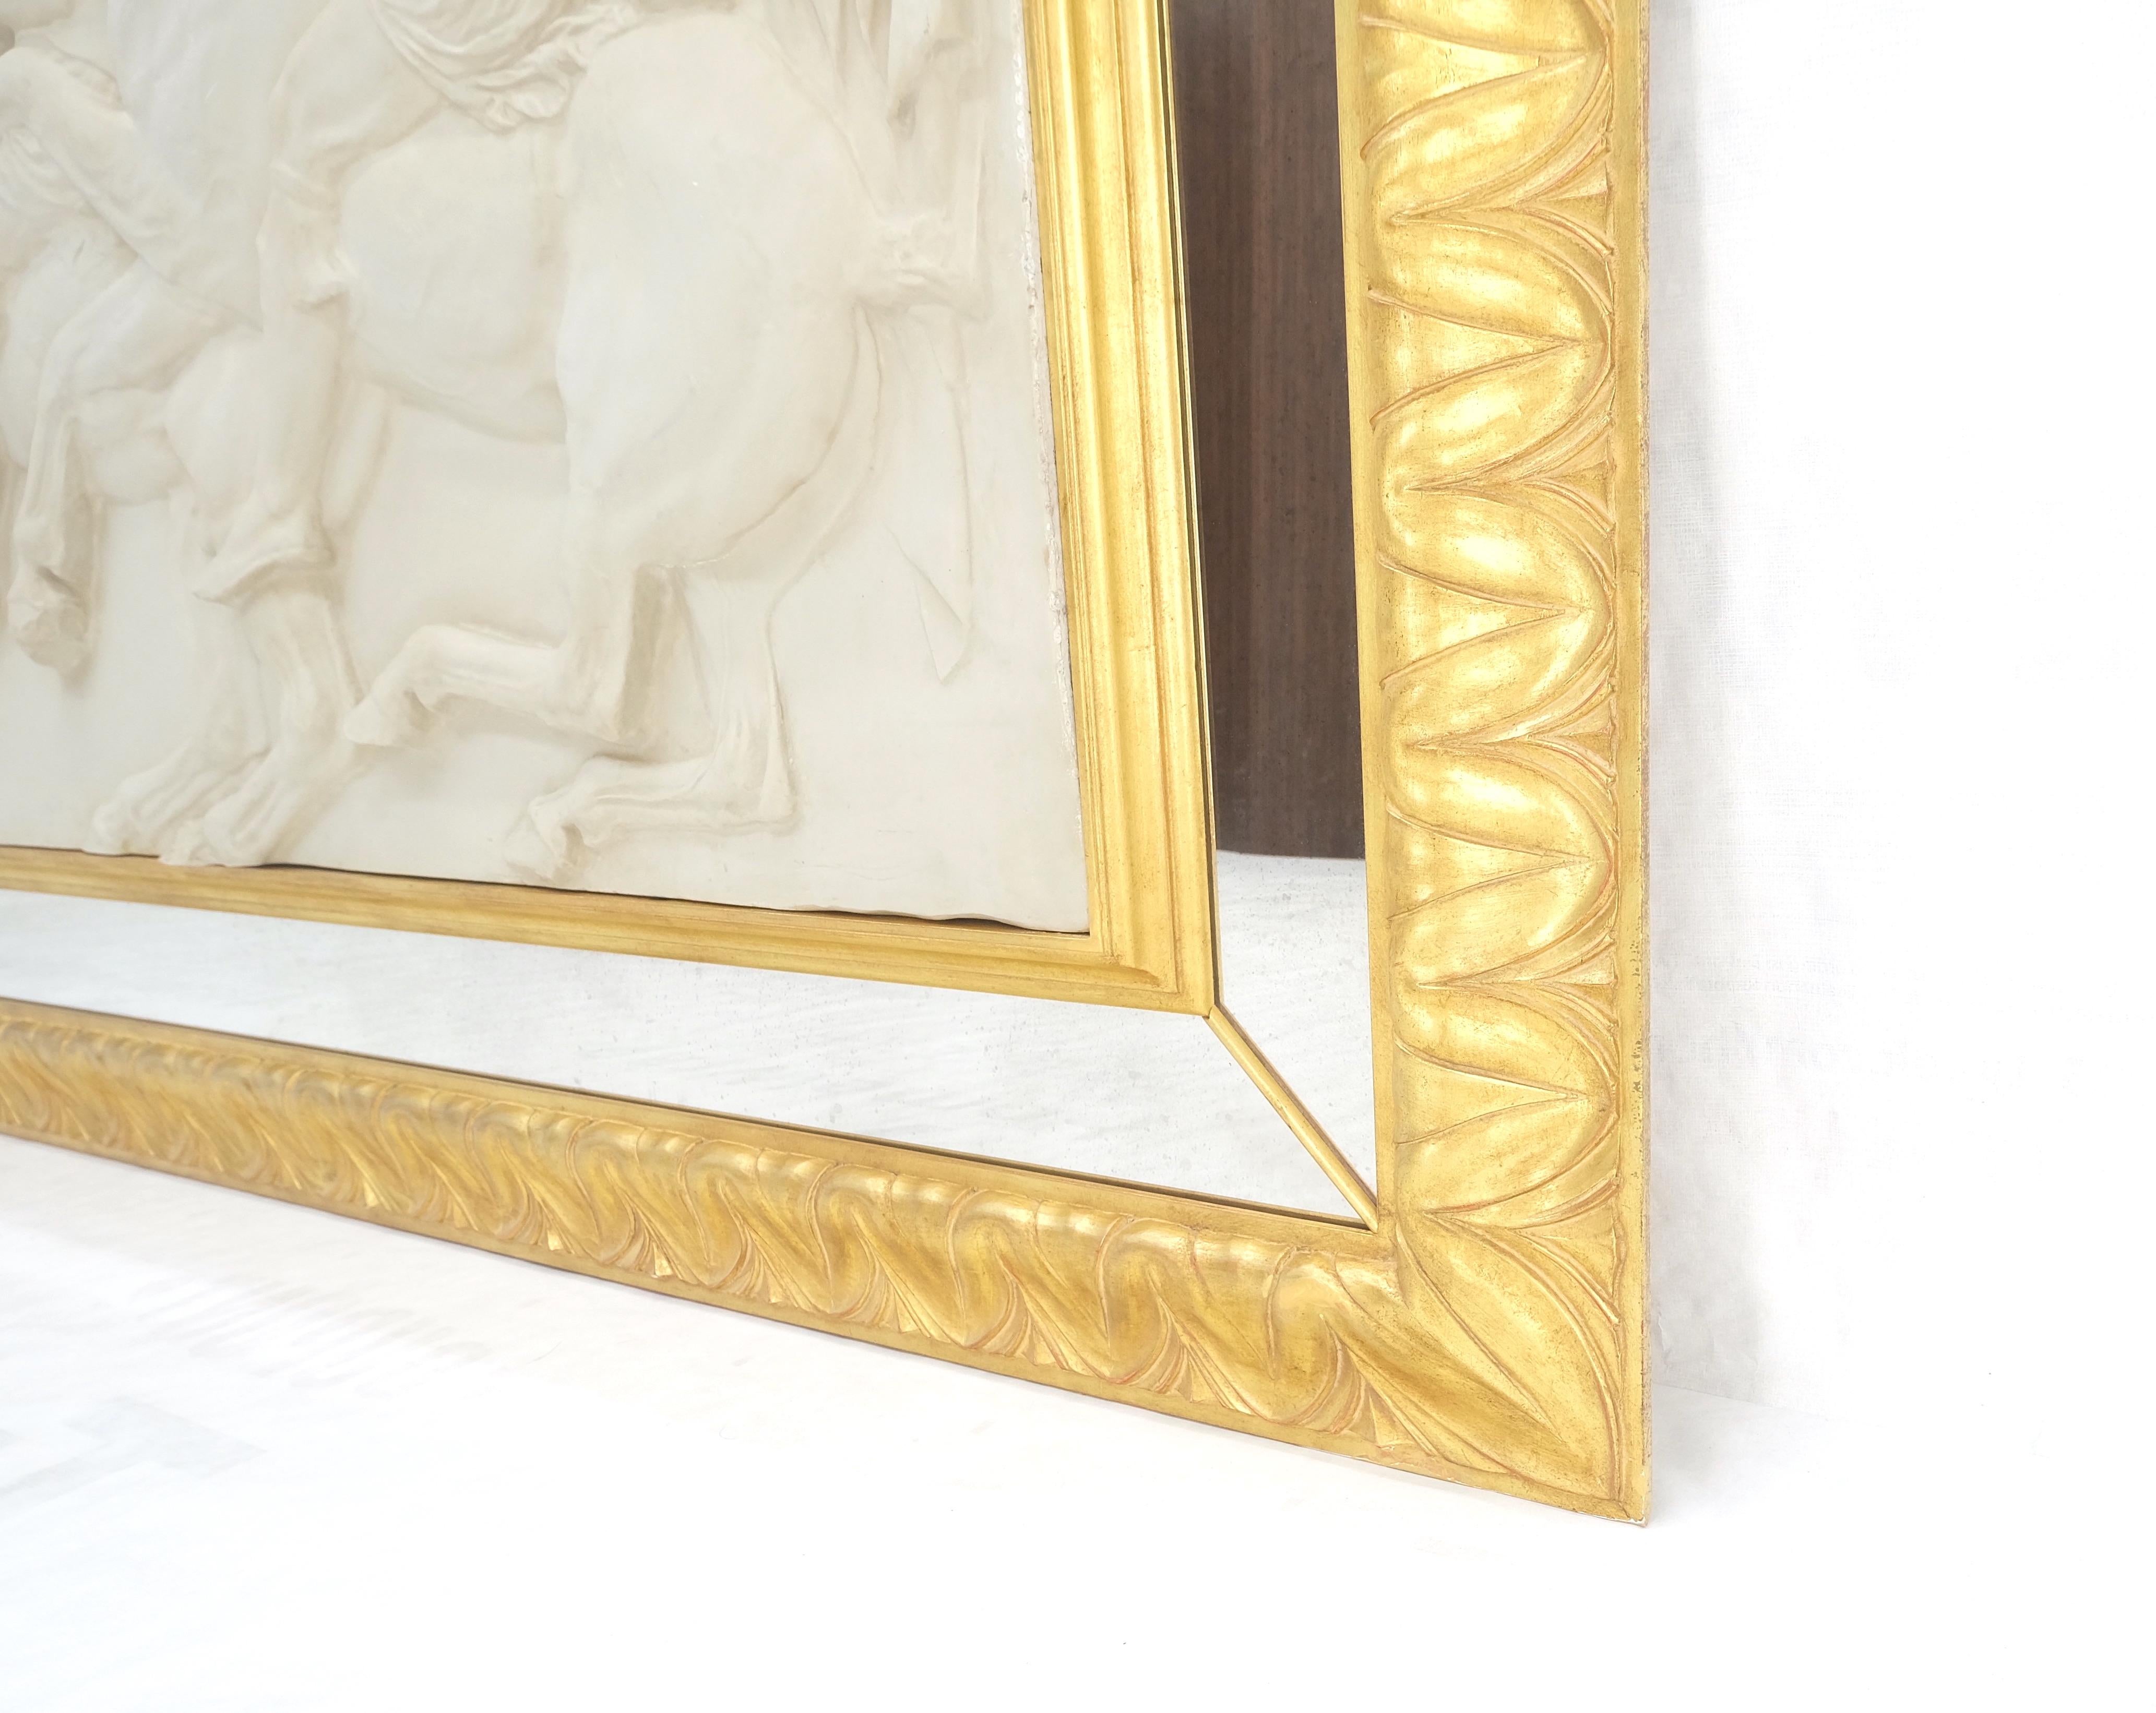 Large Carved Alabaster Horse Riding Scene Wall Plaque In Gold Leaf Mirror Frame 7